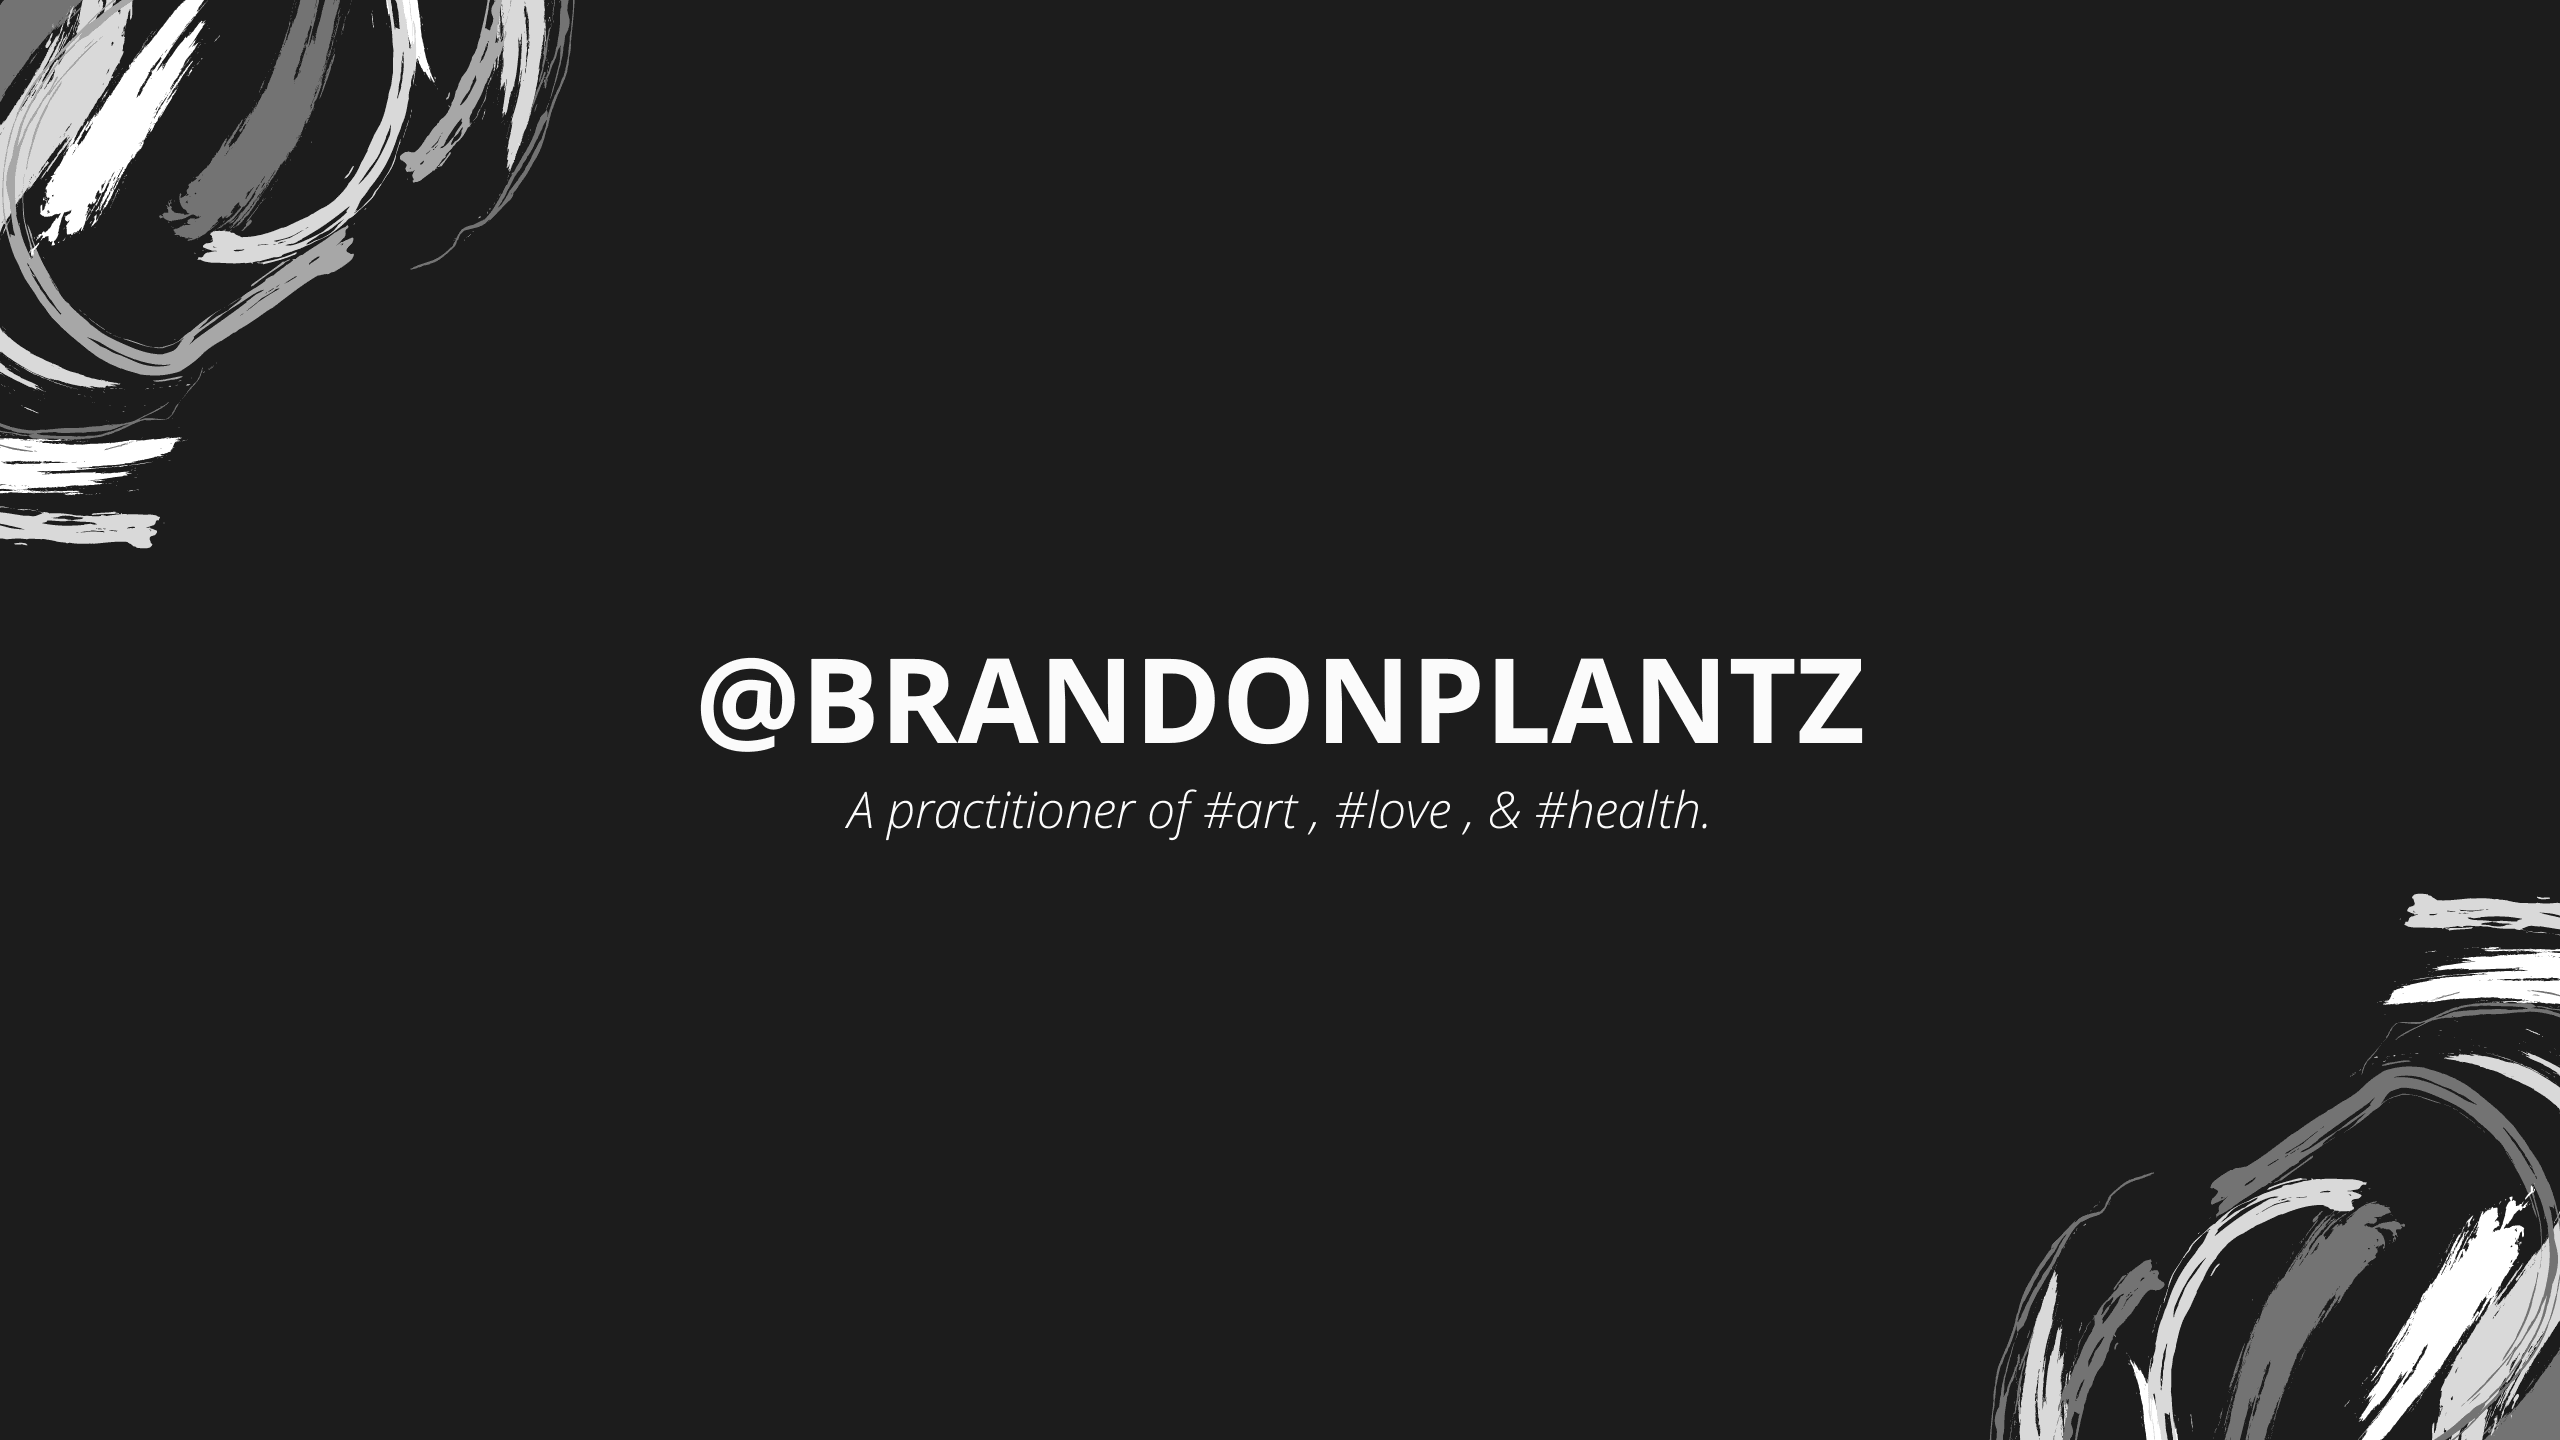 BrandonPlantz バナー